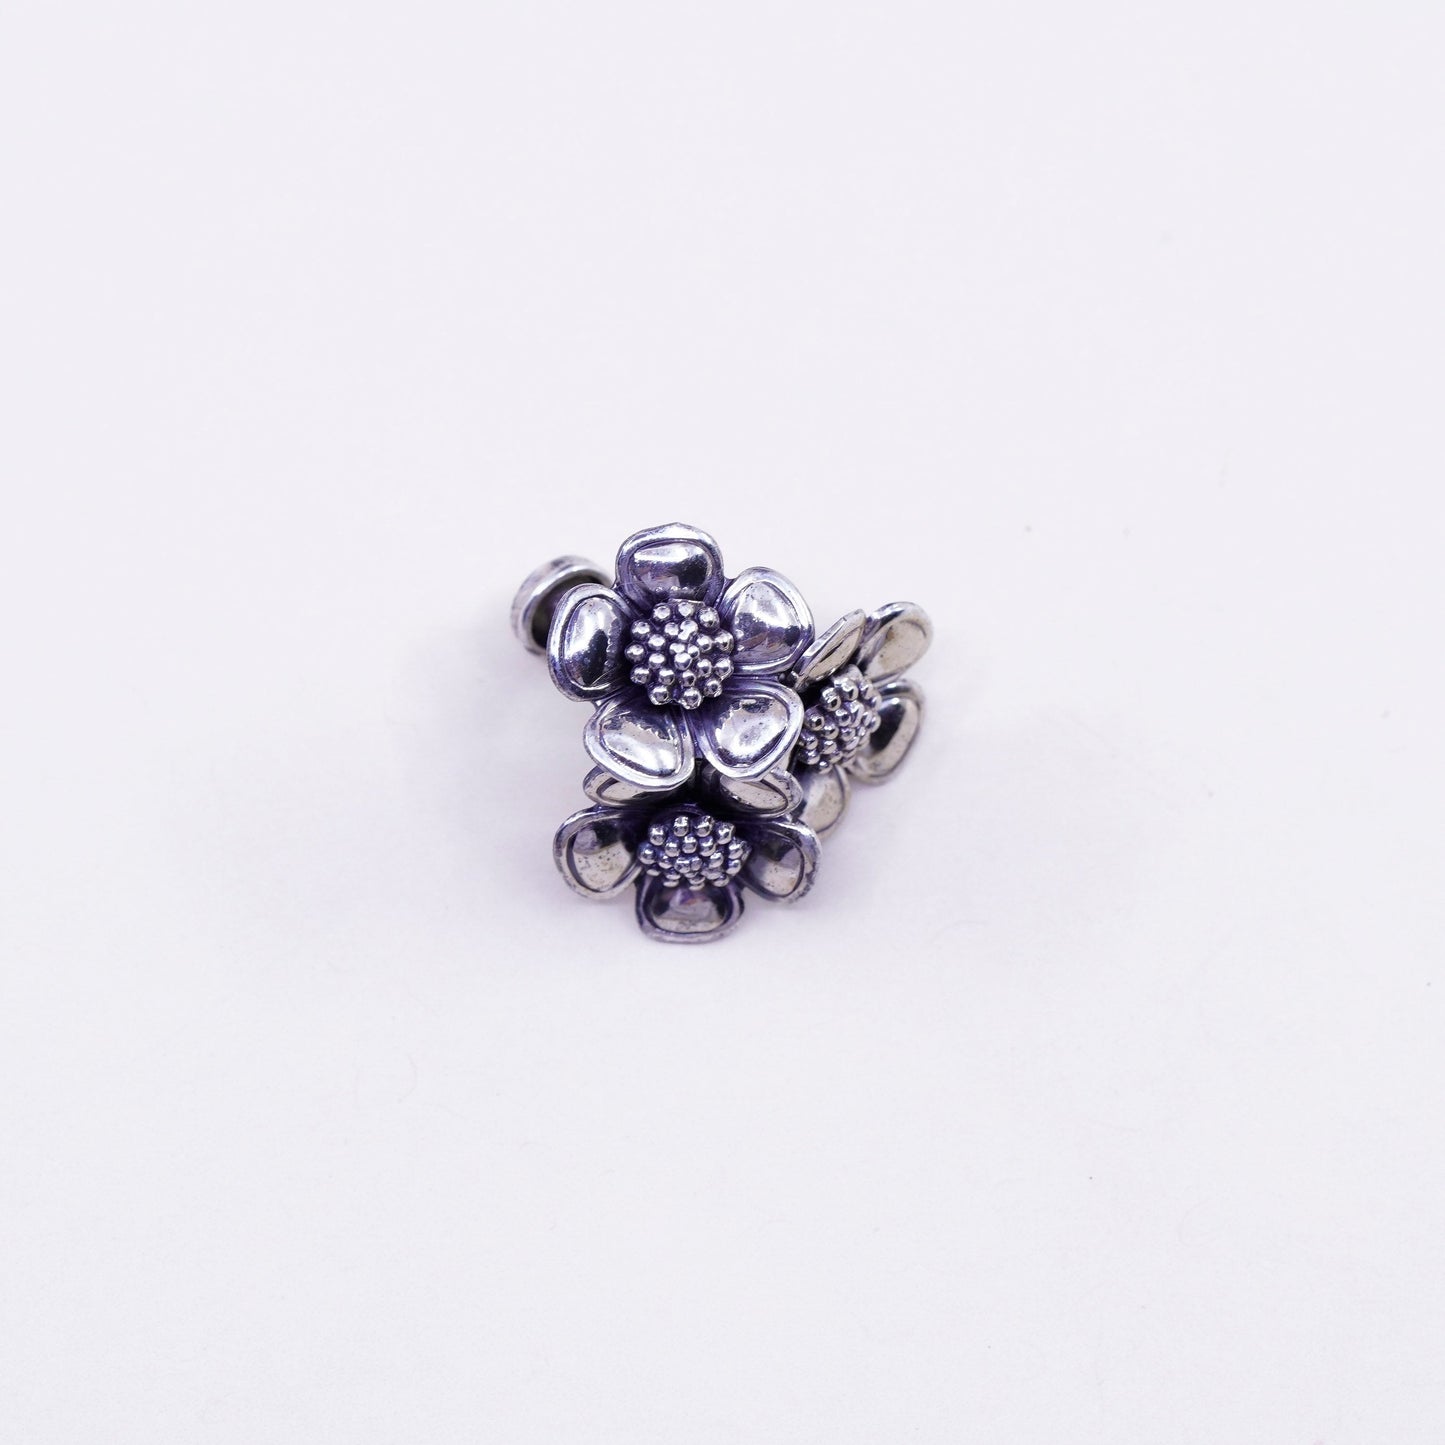 Vintage Sterling silver handmade earrings, 925 screw back flower earrings